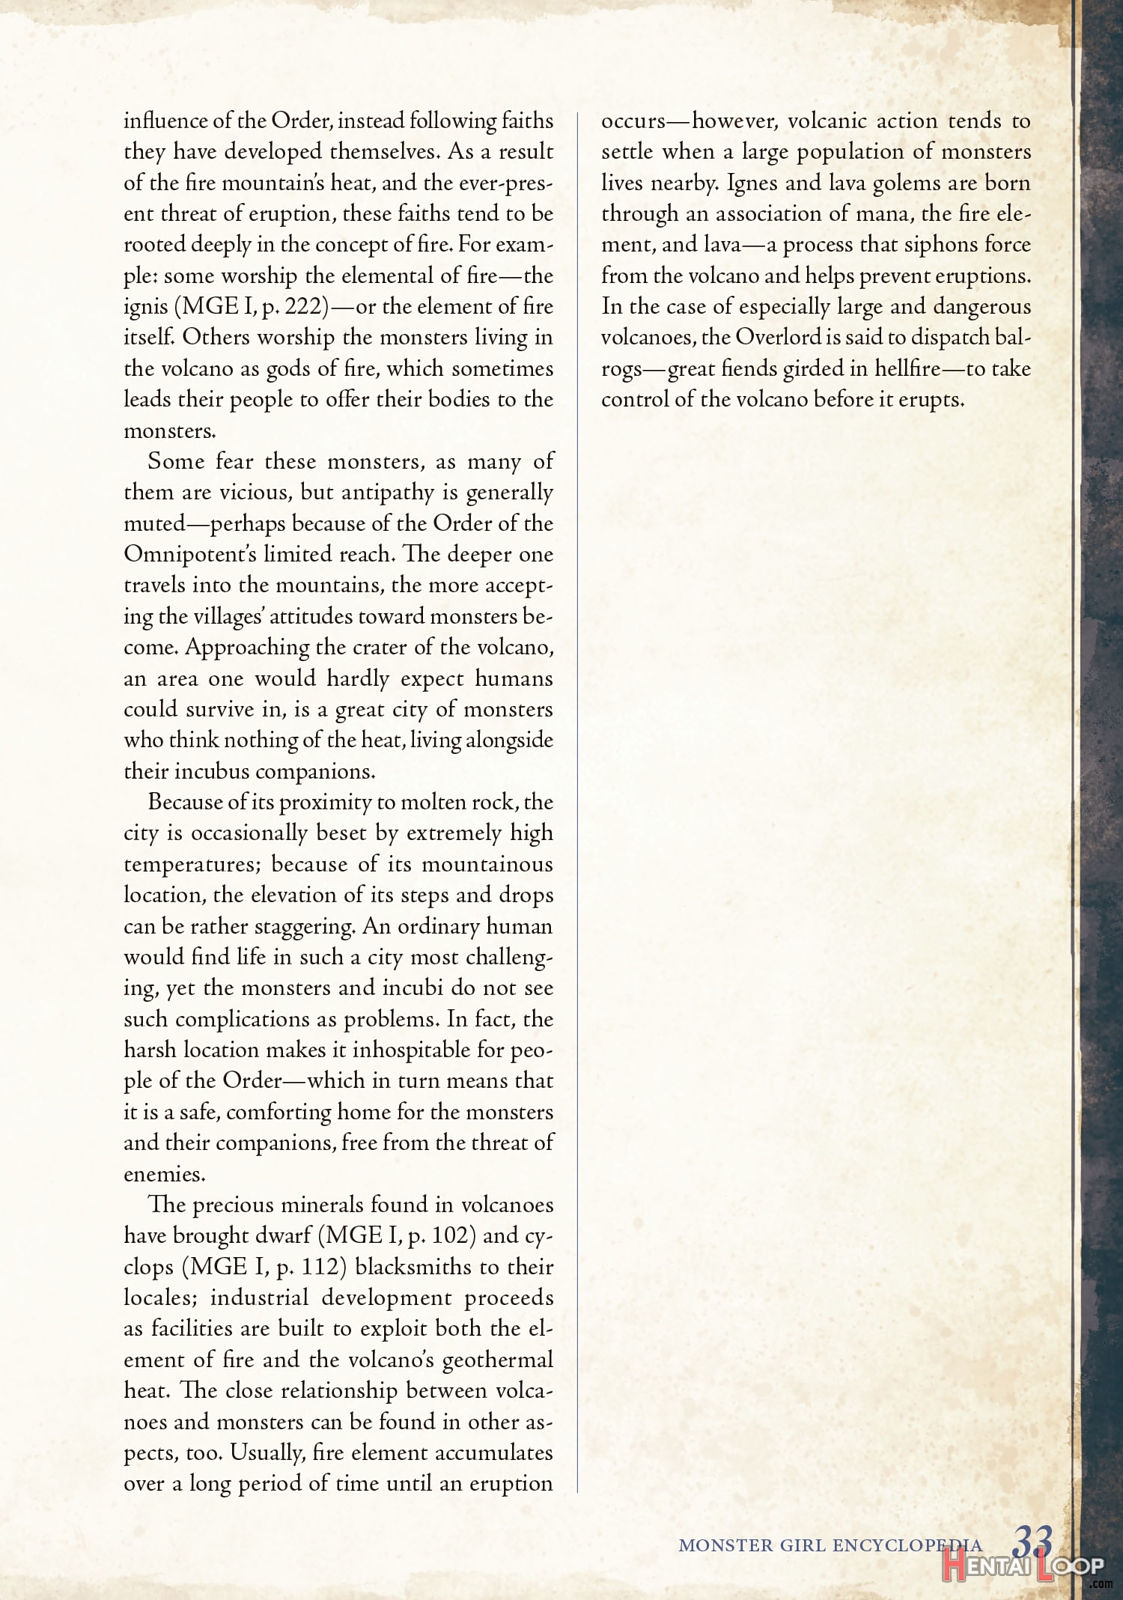 Monster Girl Encyclopedia Vol. 2 page 34